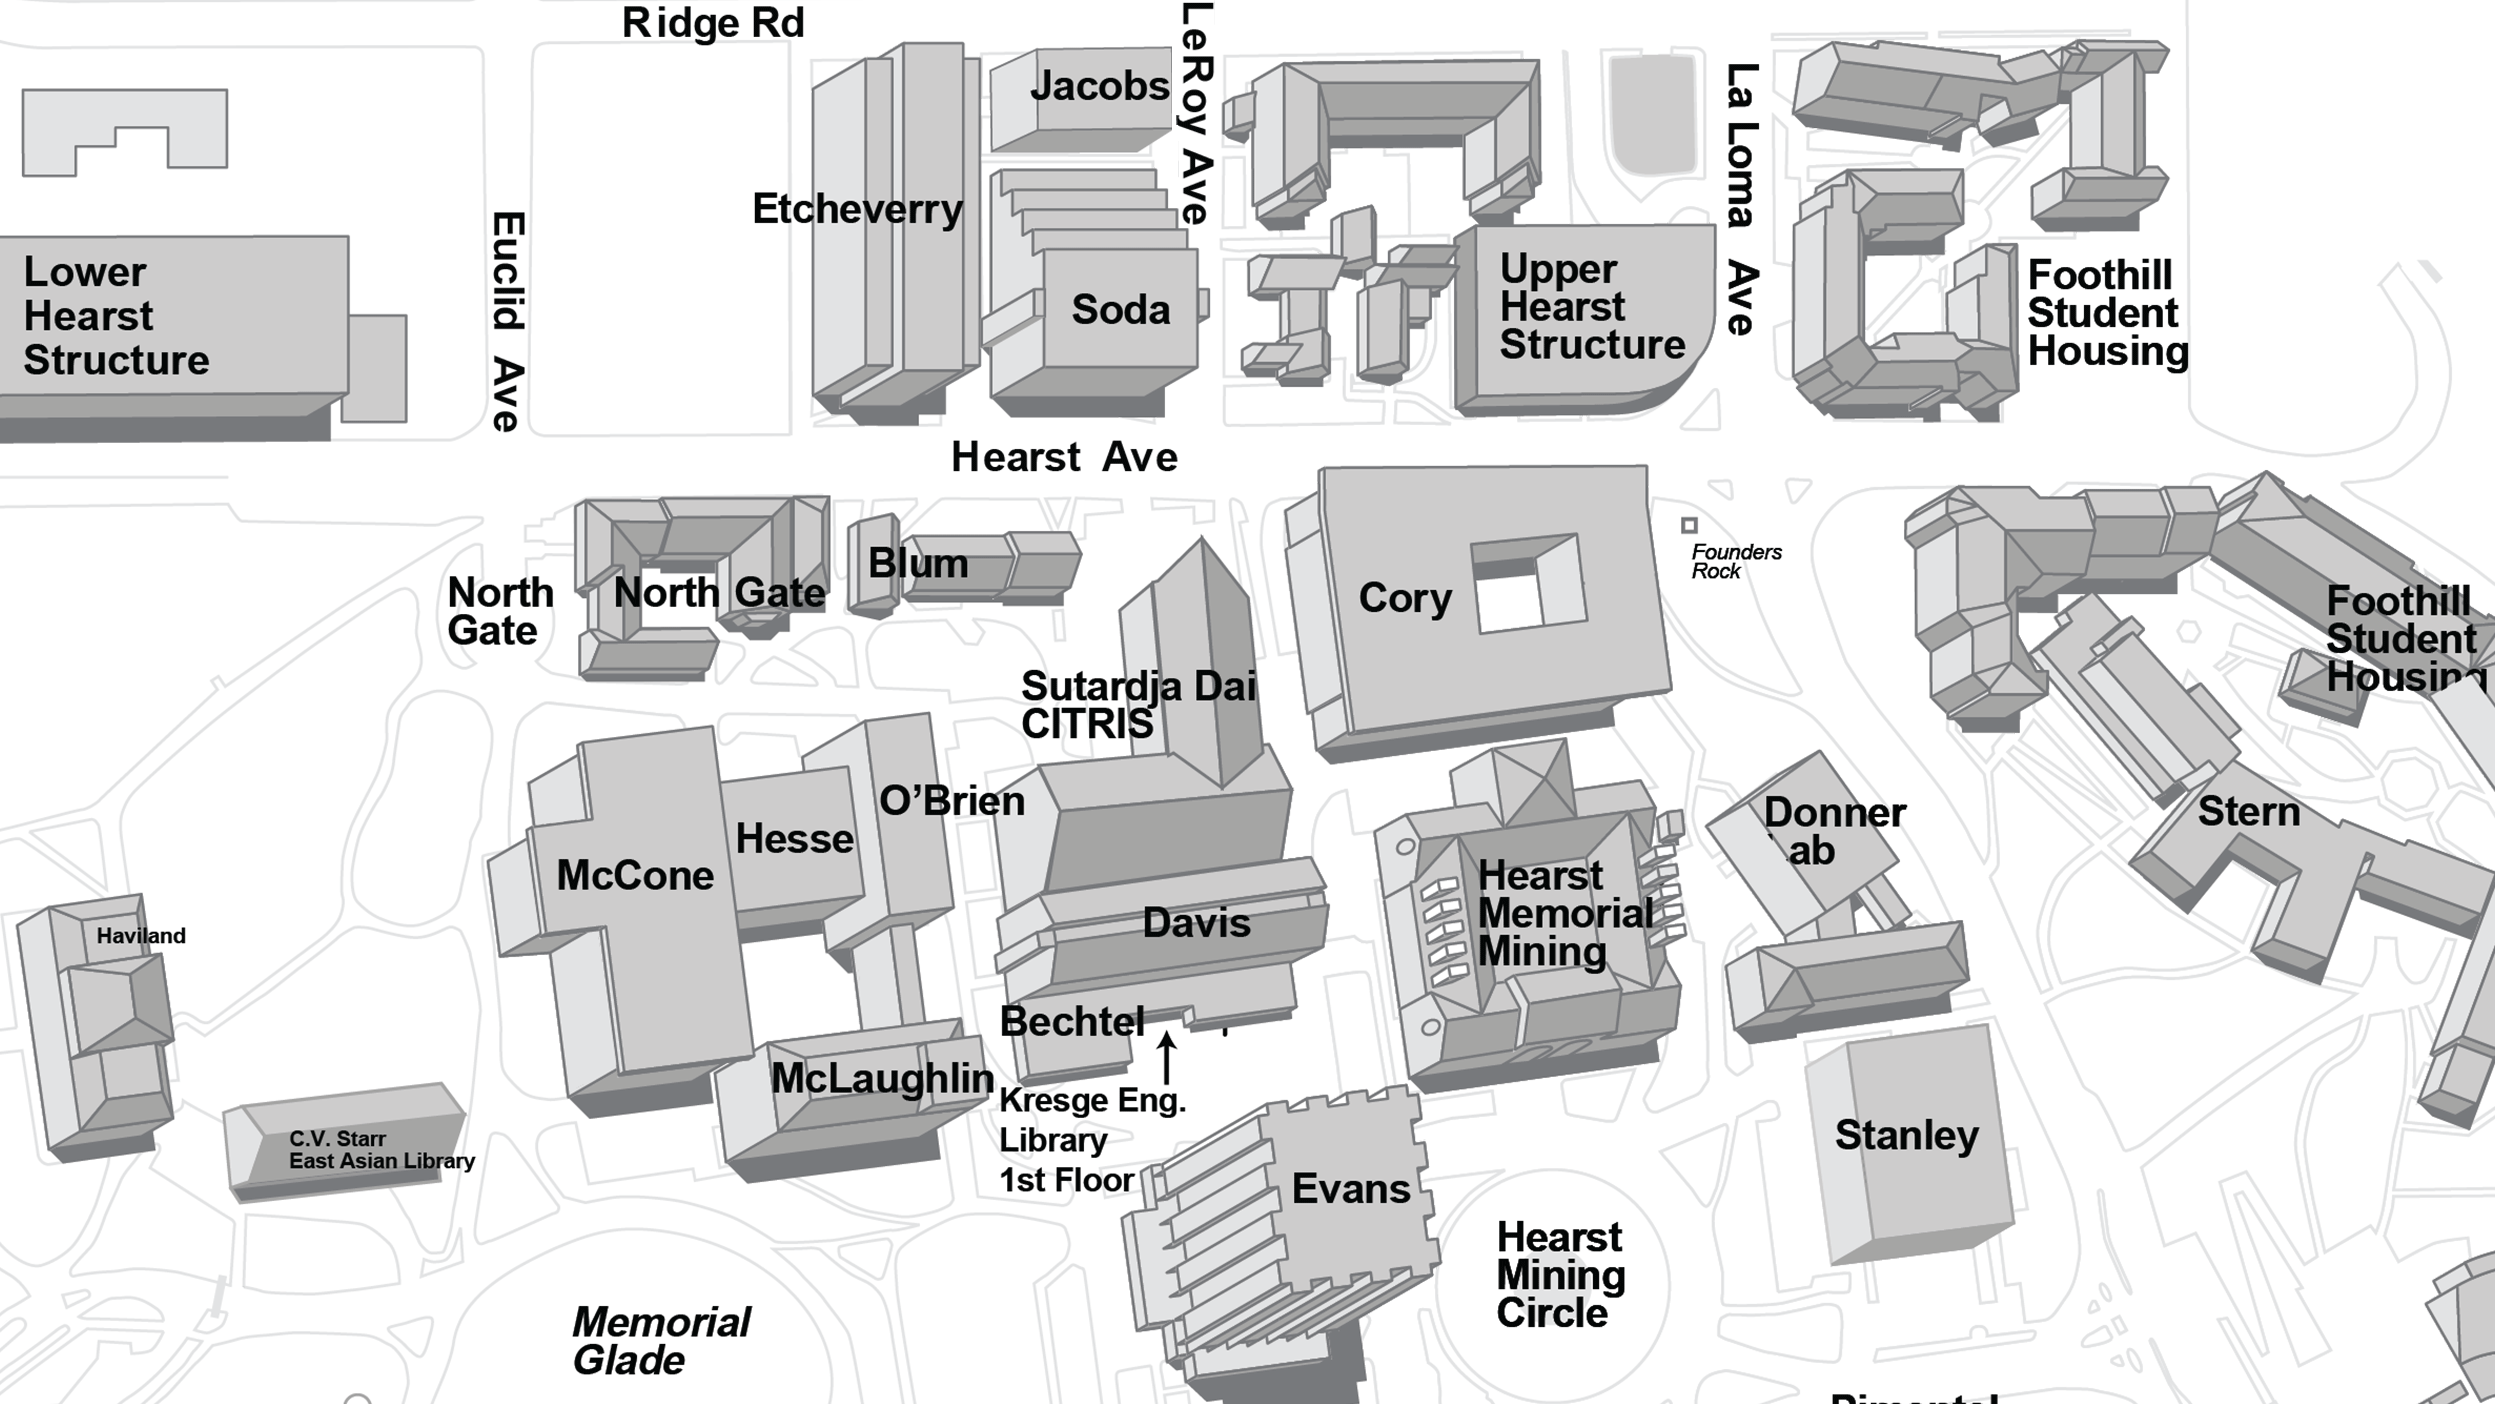 Map excerpt from engineering quadrant of Berkeley campus